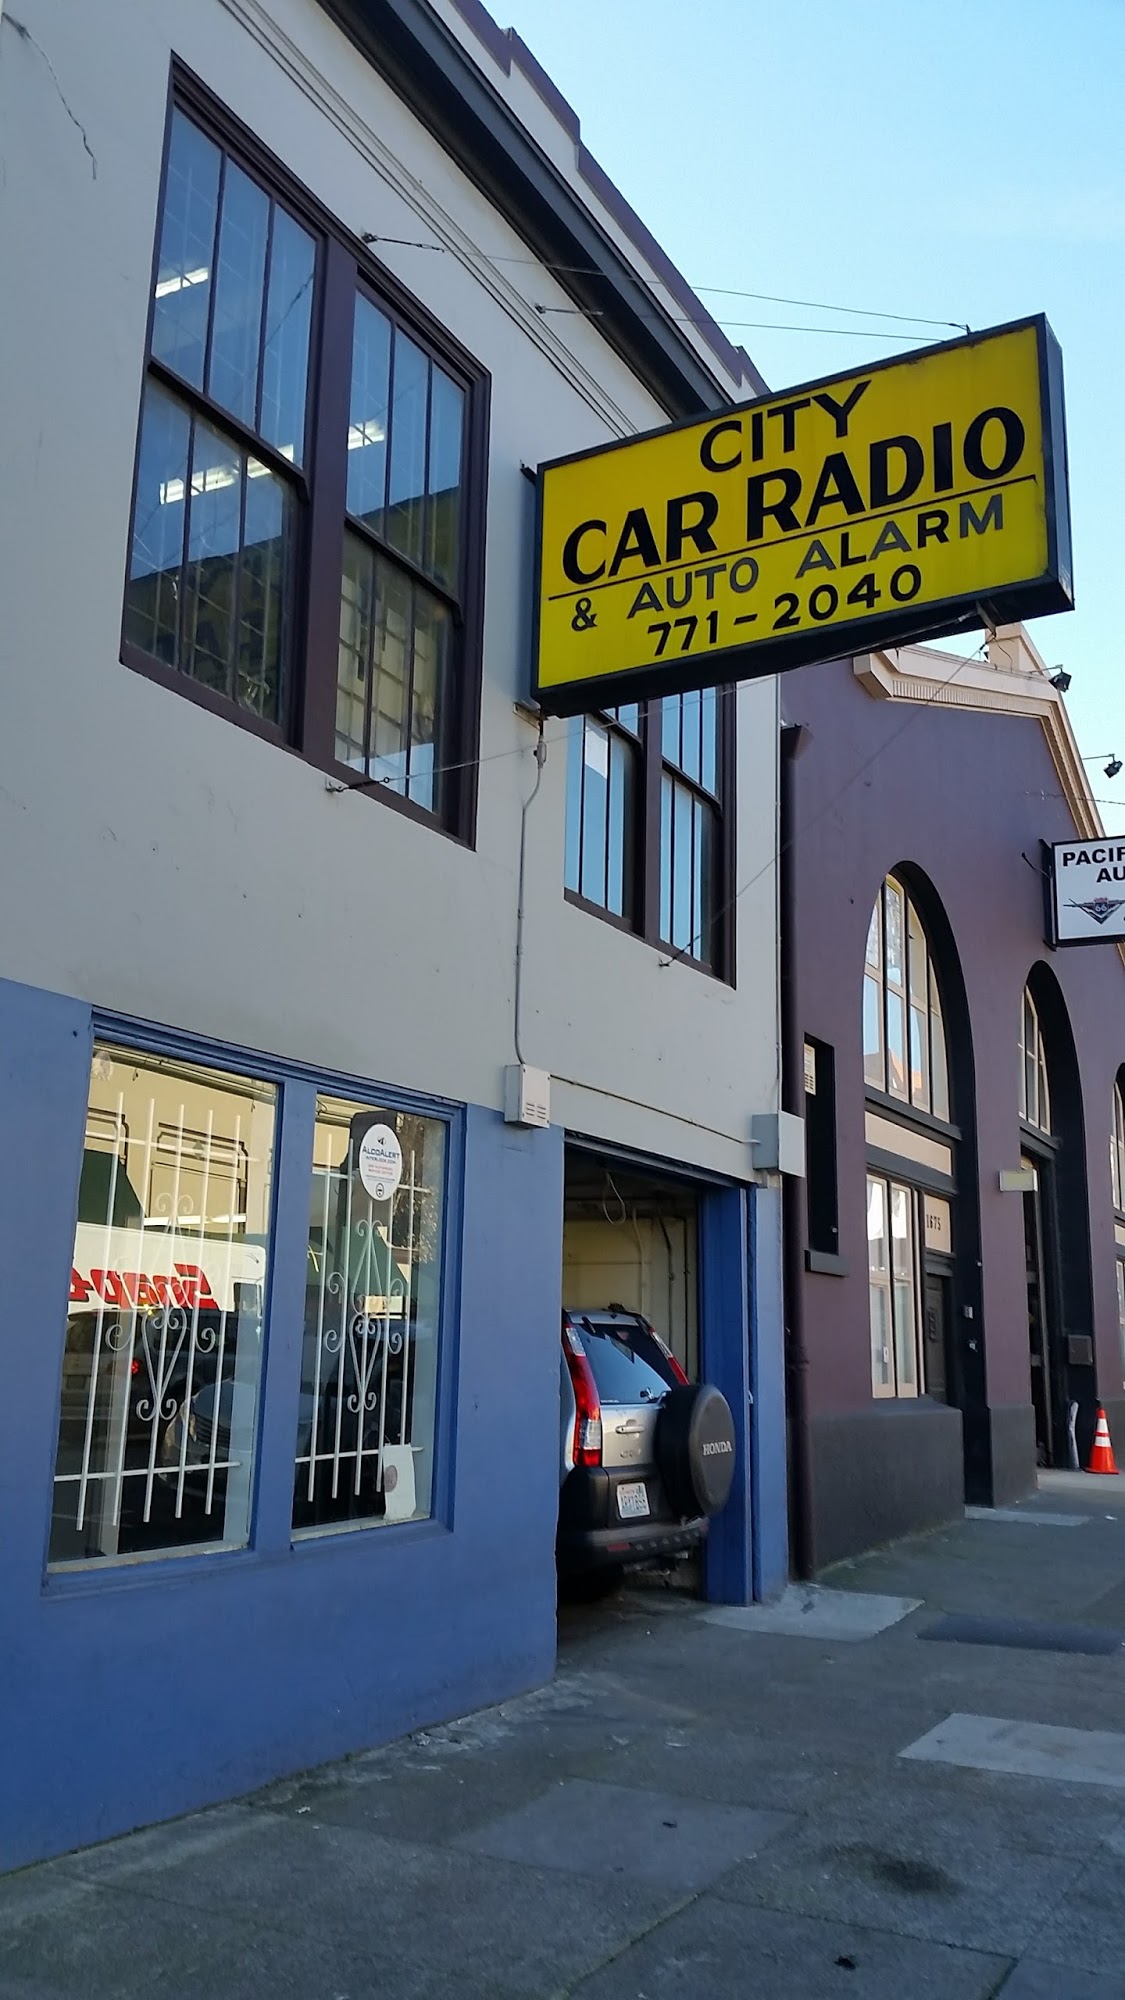 City Car Radio